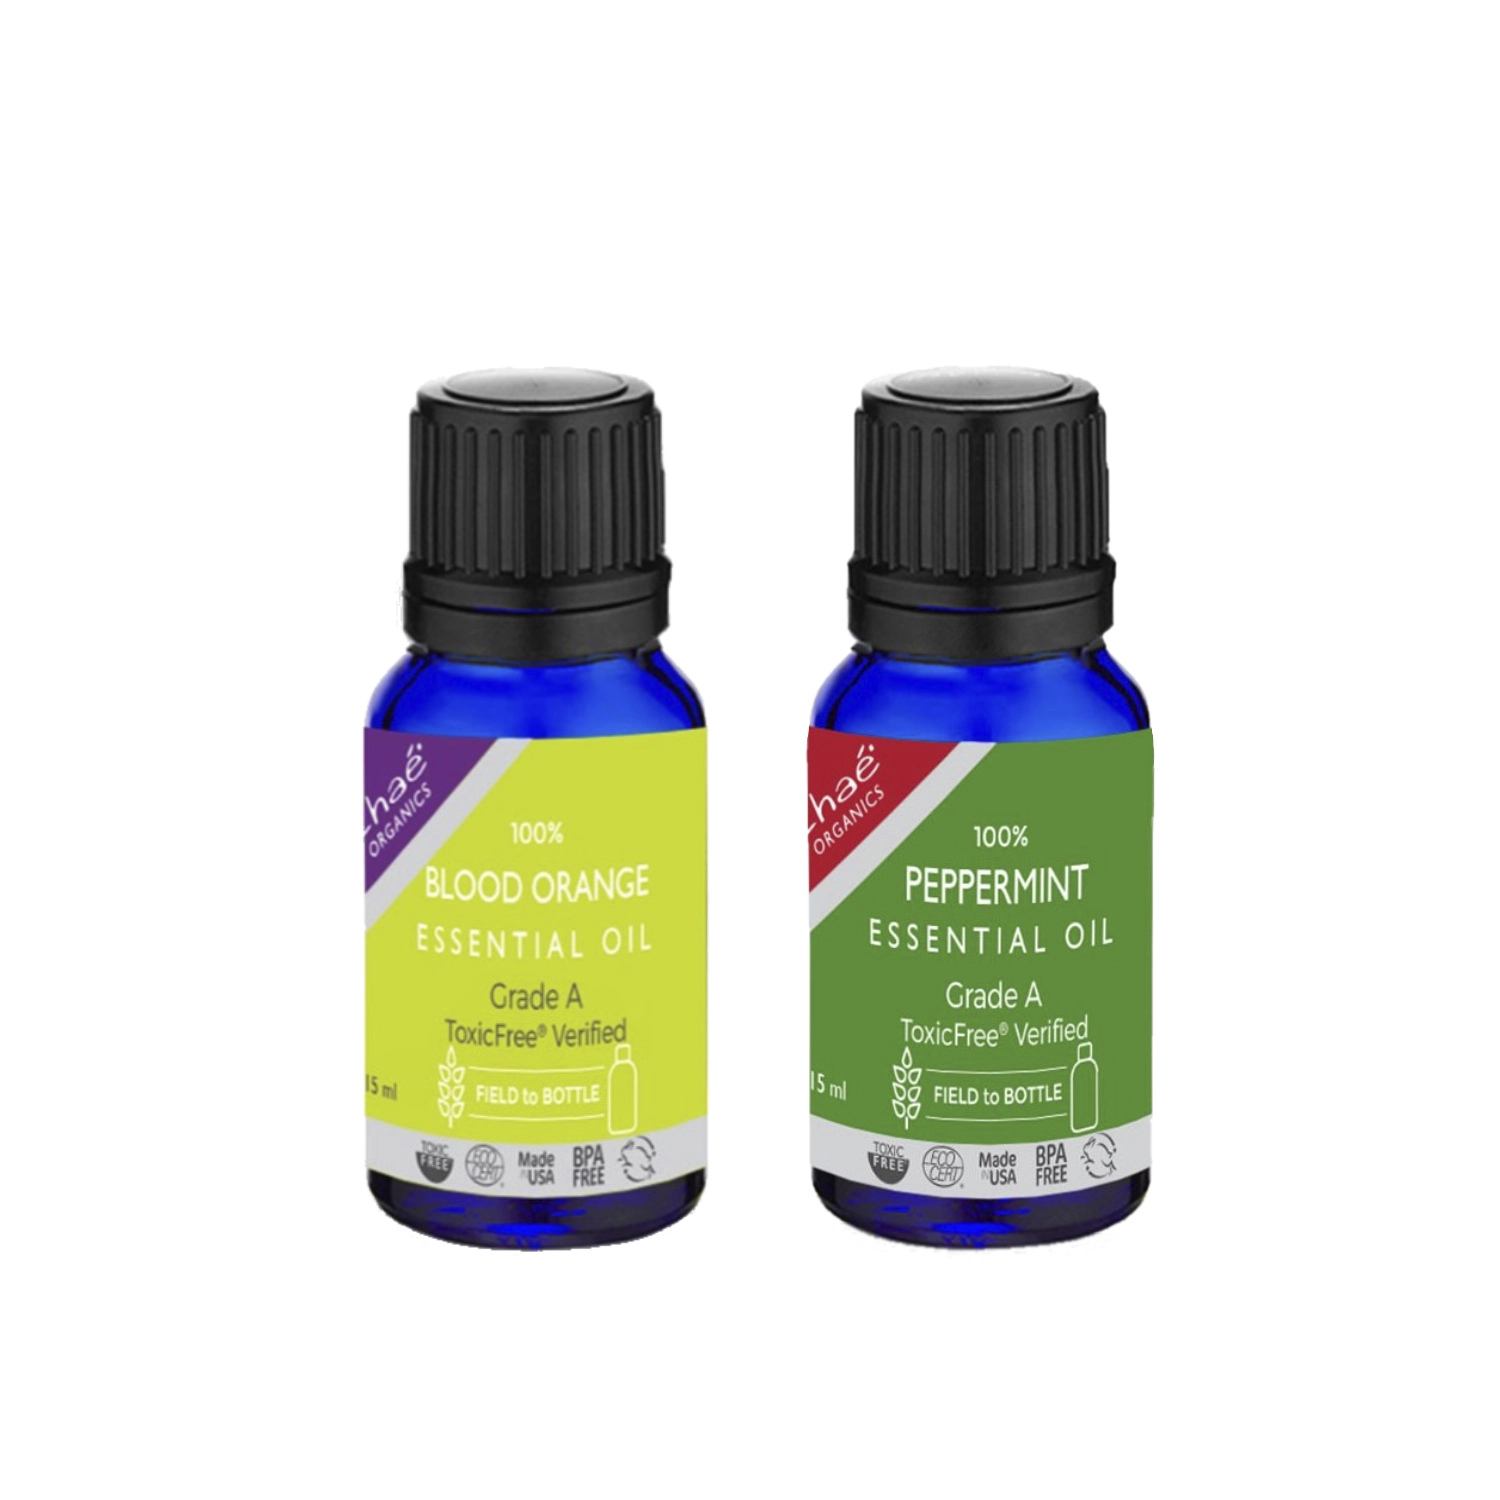 Essential Oil Aromatherapy - Bundled Kit